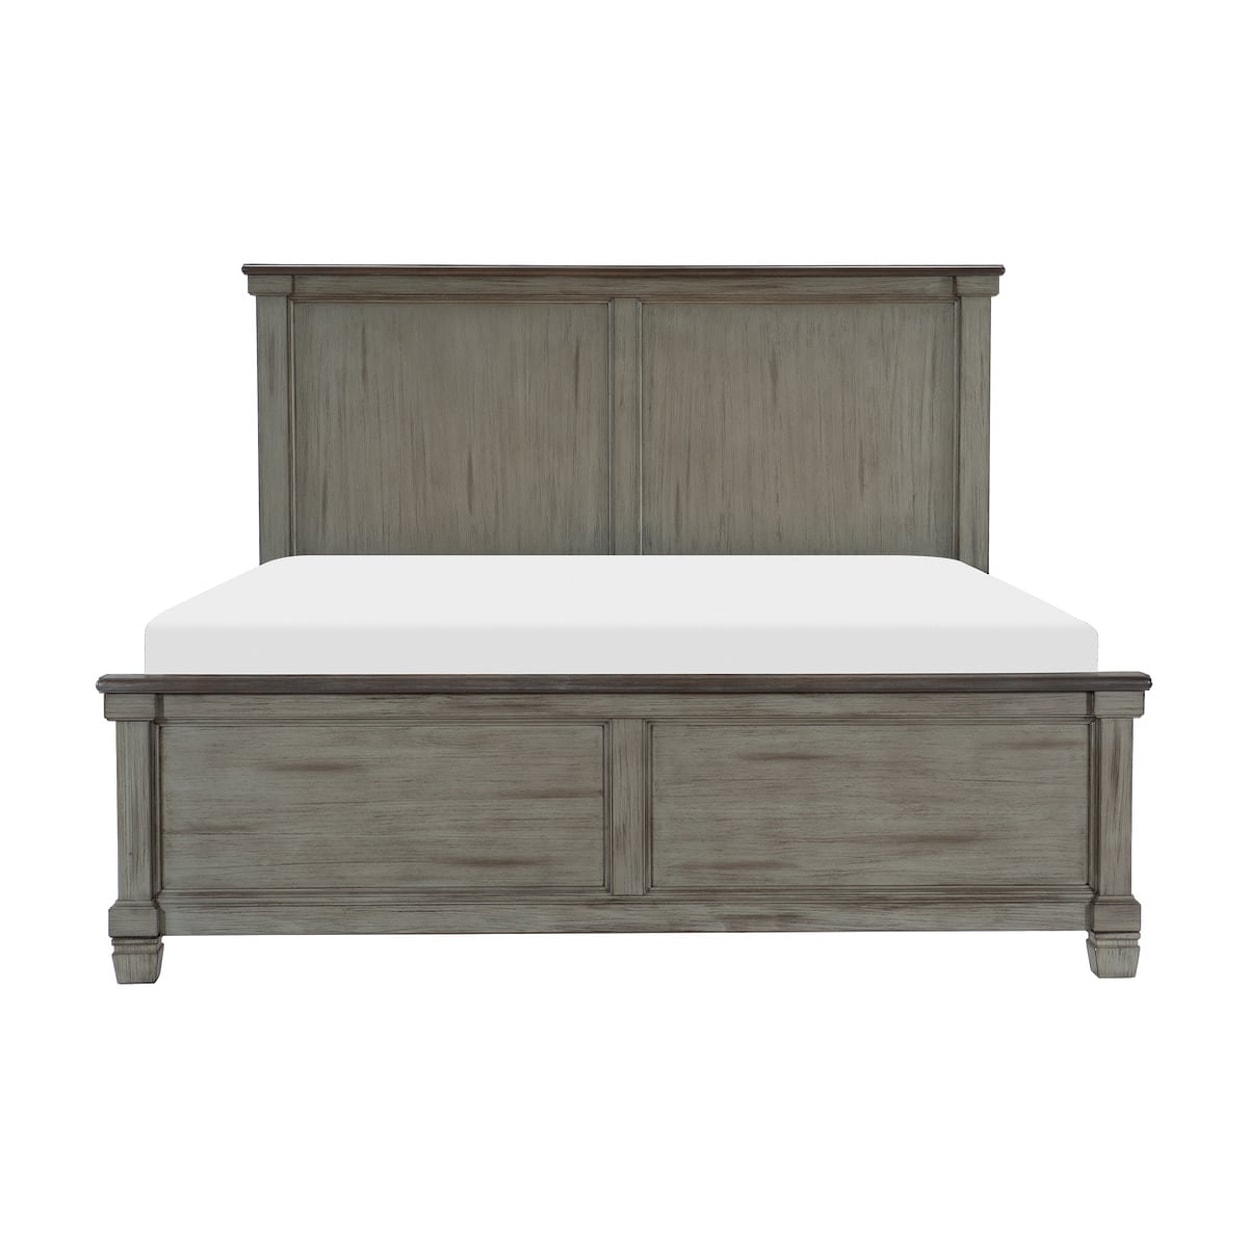 Homelegance Furniture Weaver Queen Bed